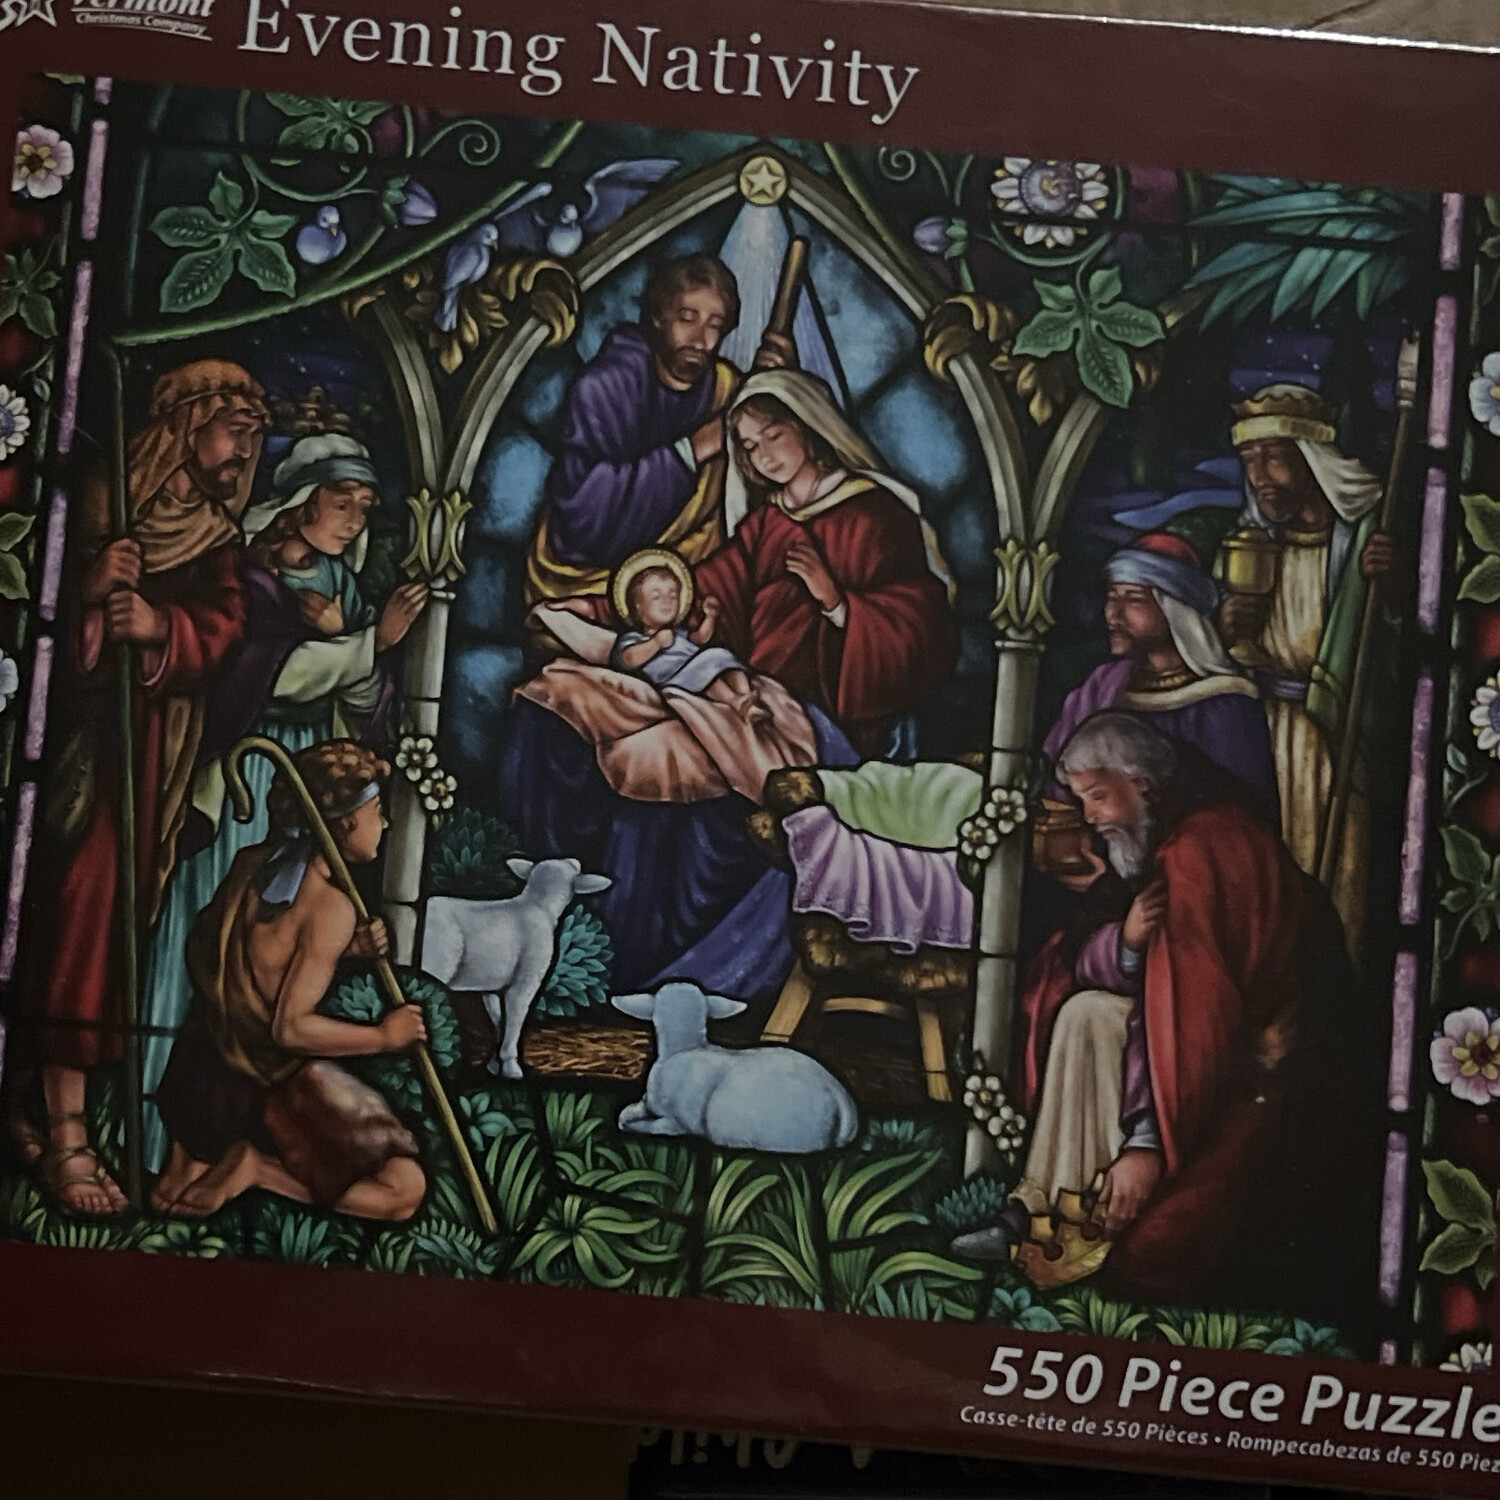 Evening Nativity Jigsaw Puzzle 550 piece